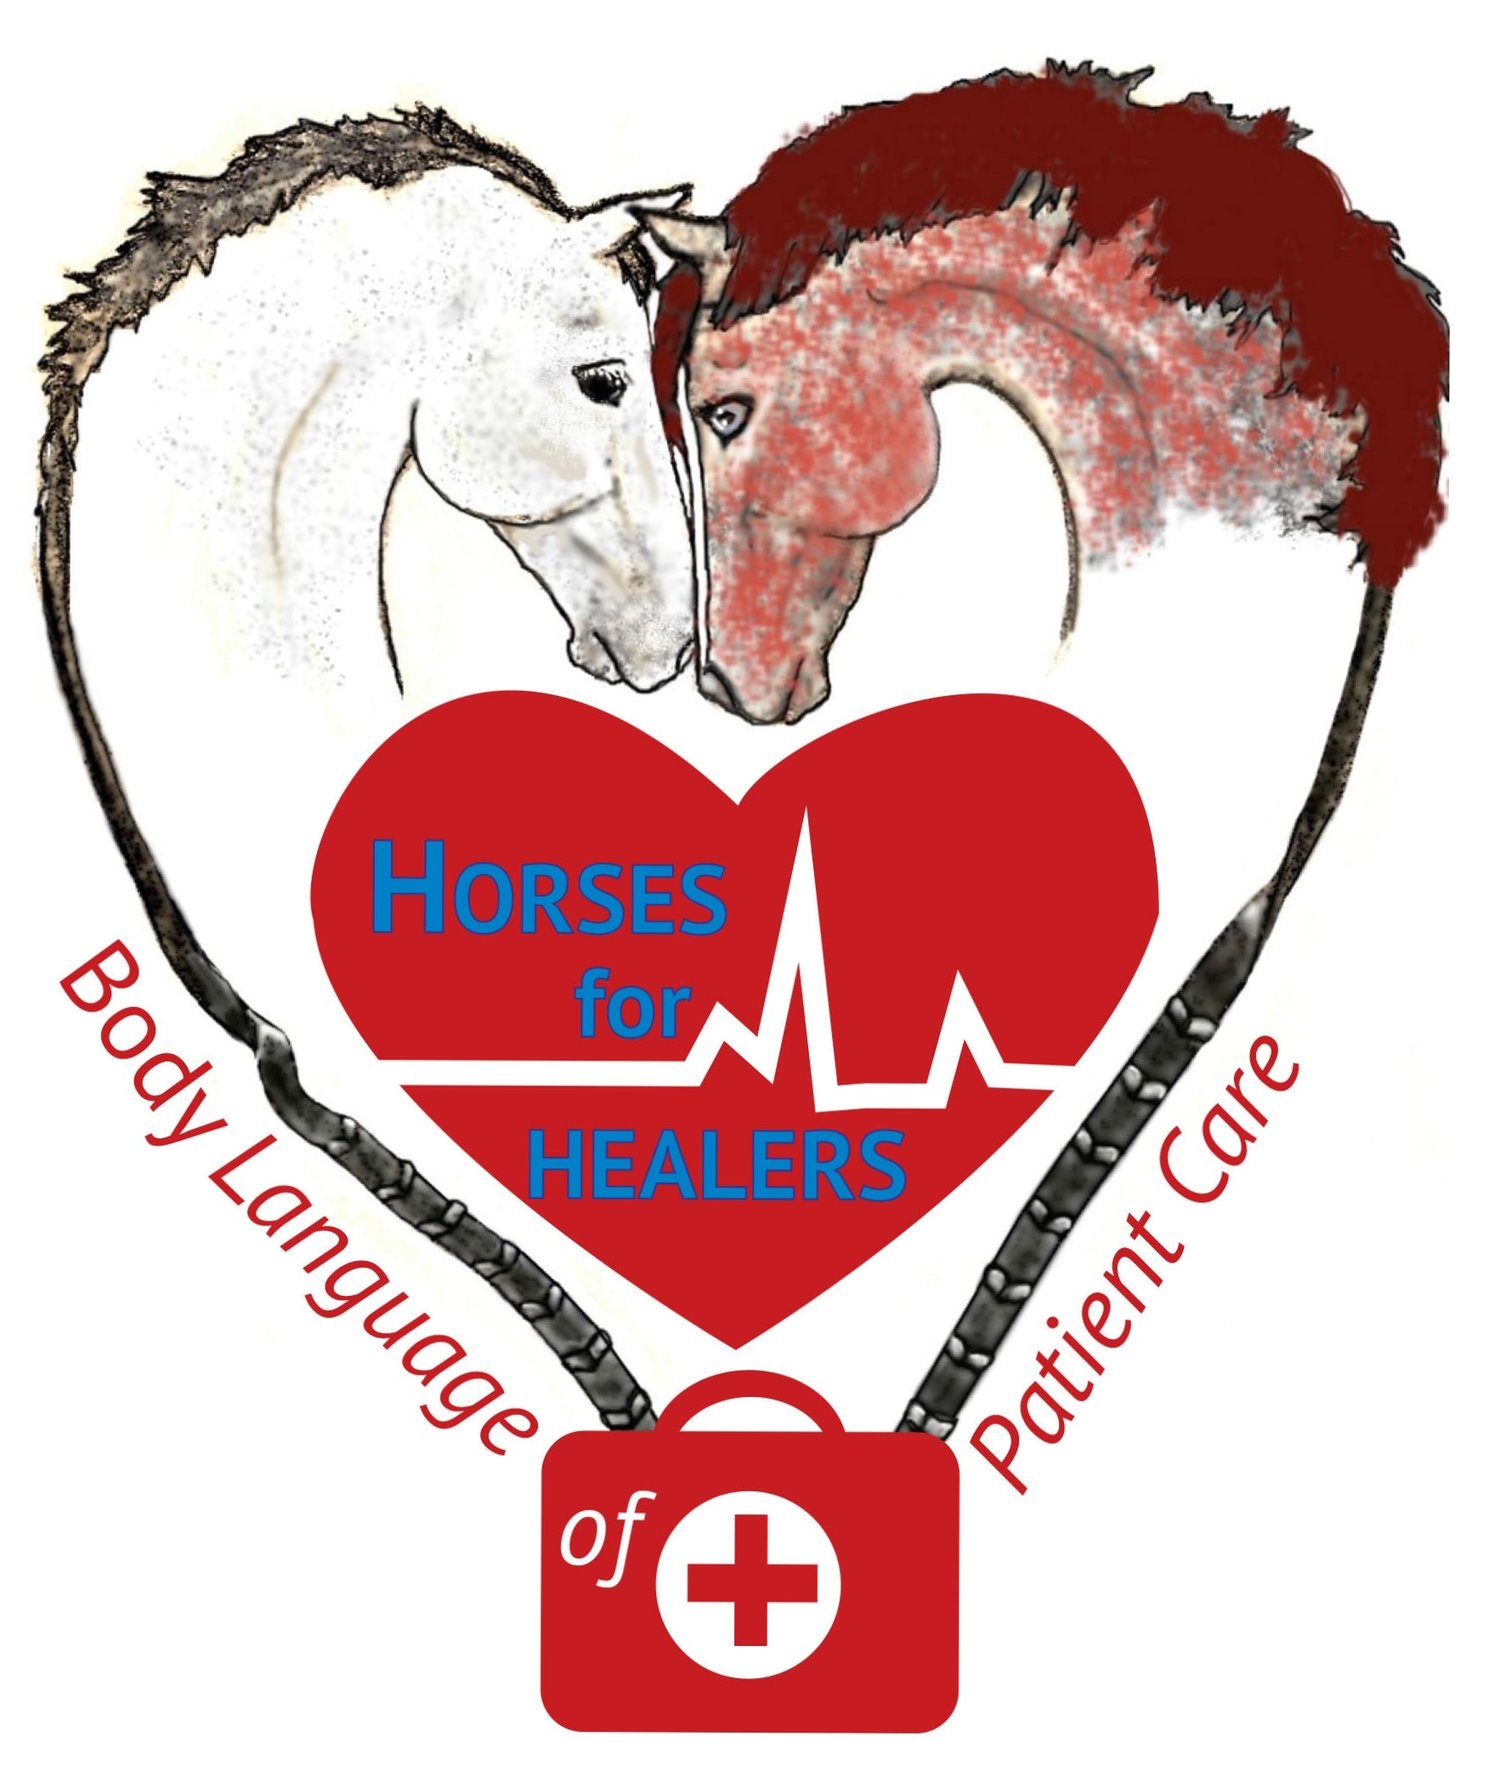 Horses for Healers